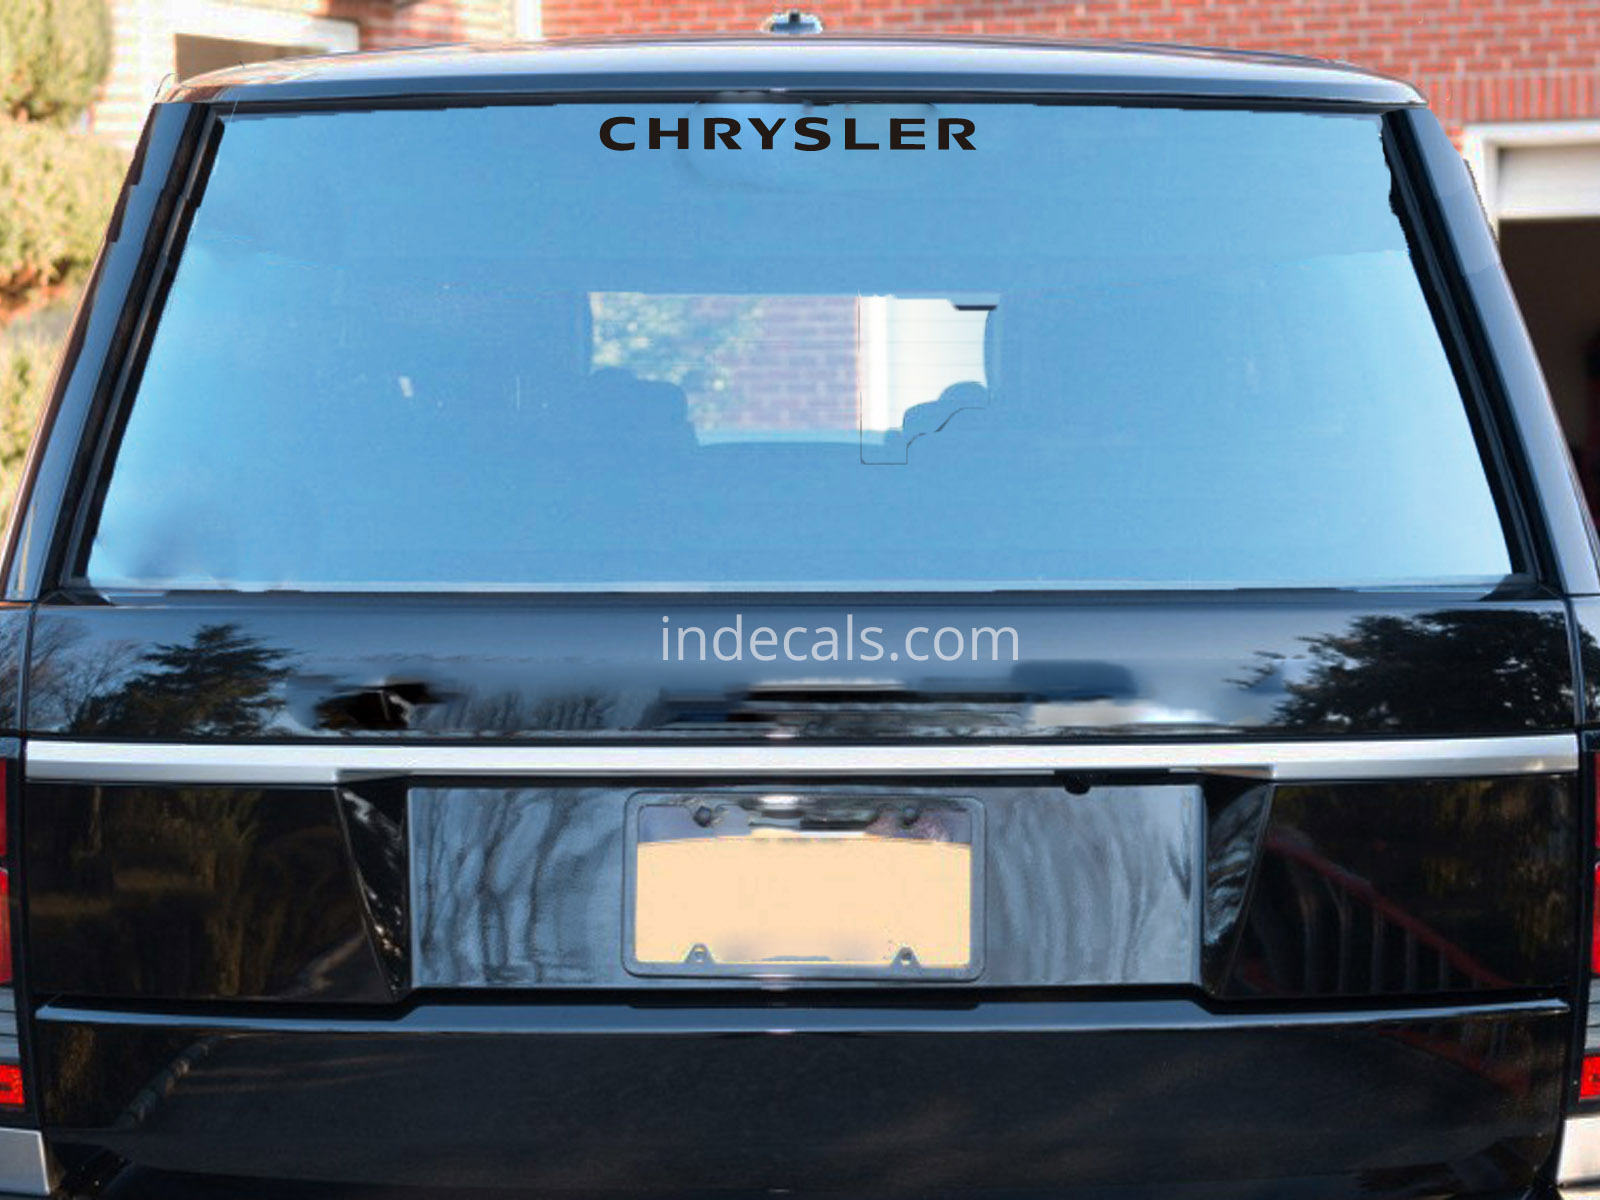 1 x Chrysler Sticker for Windshield or Back Window - Black